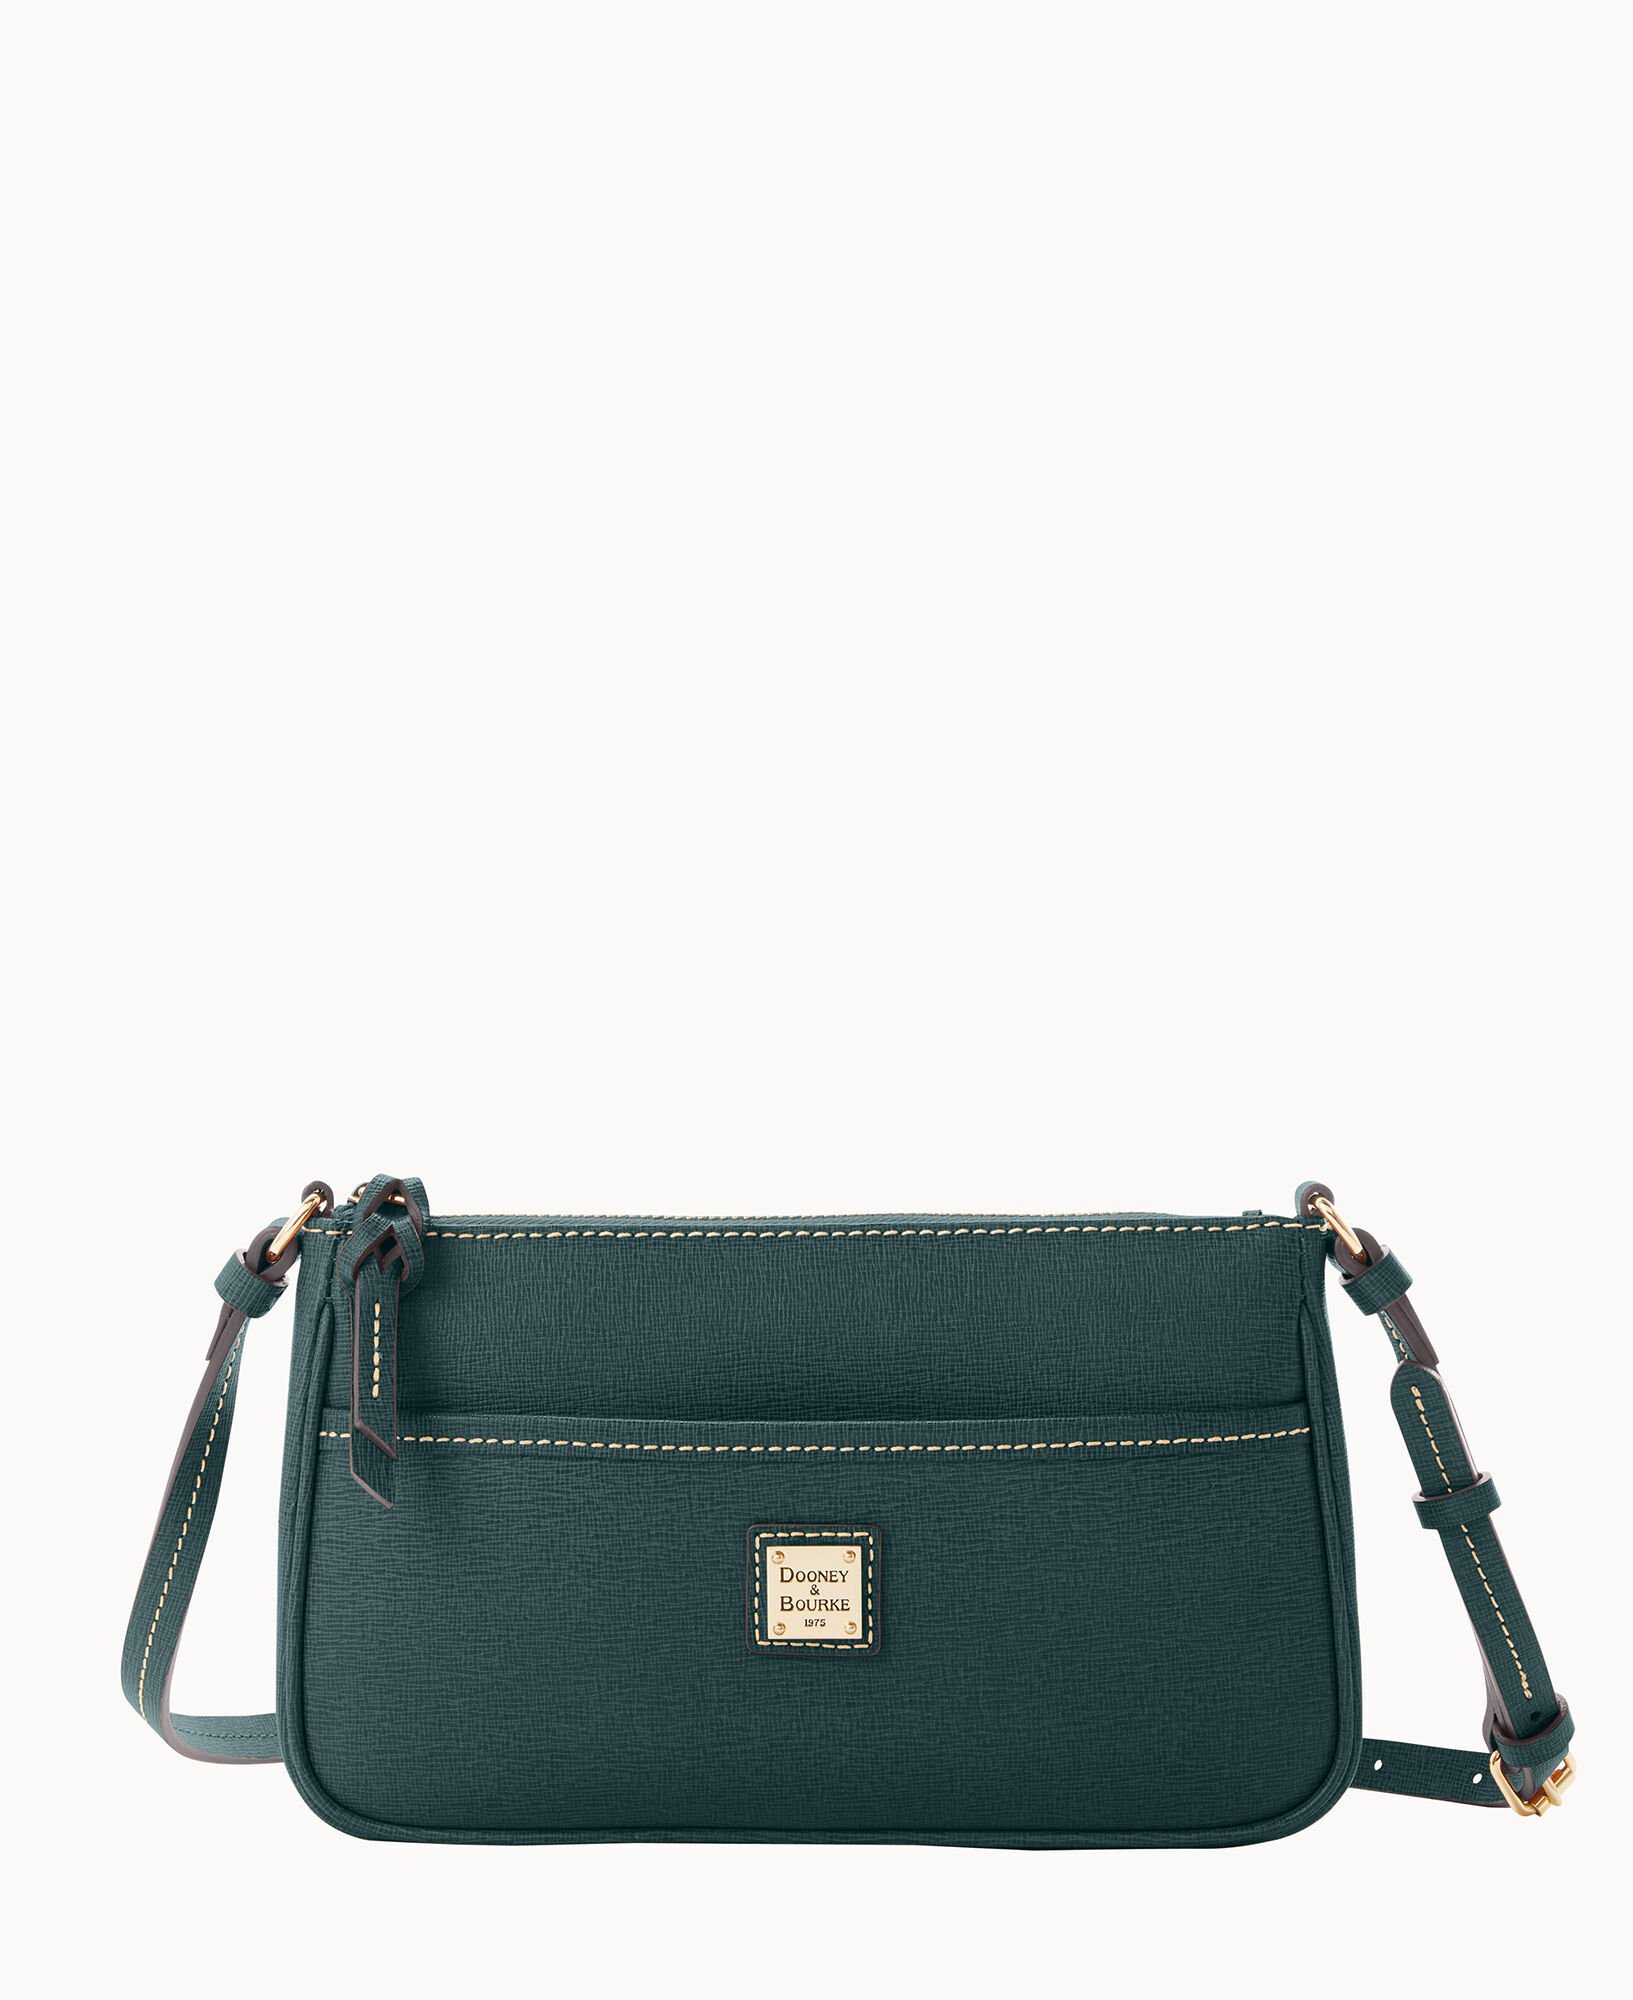 Dooney & Bourke Handbag, Saffiano Lola Crossbody